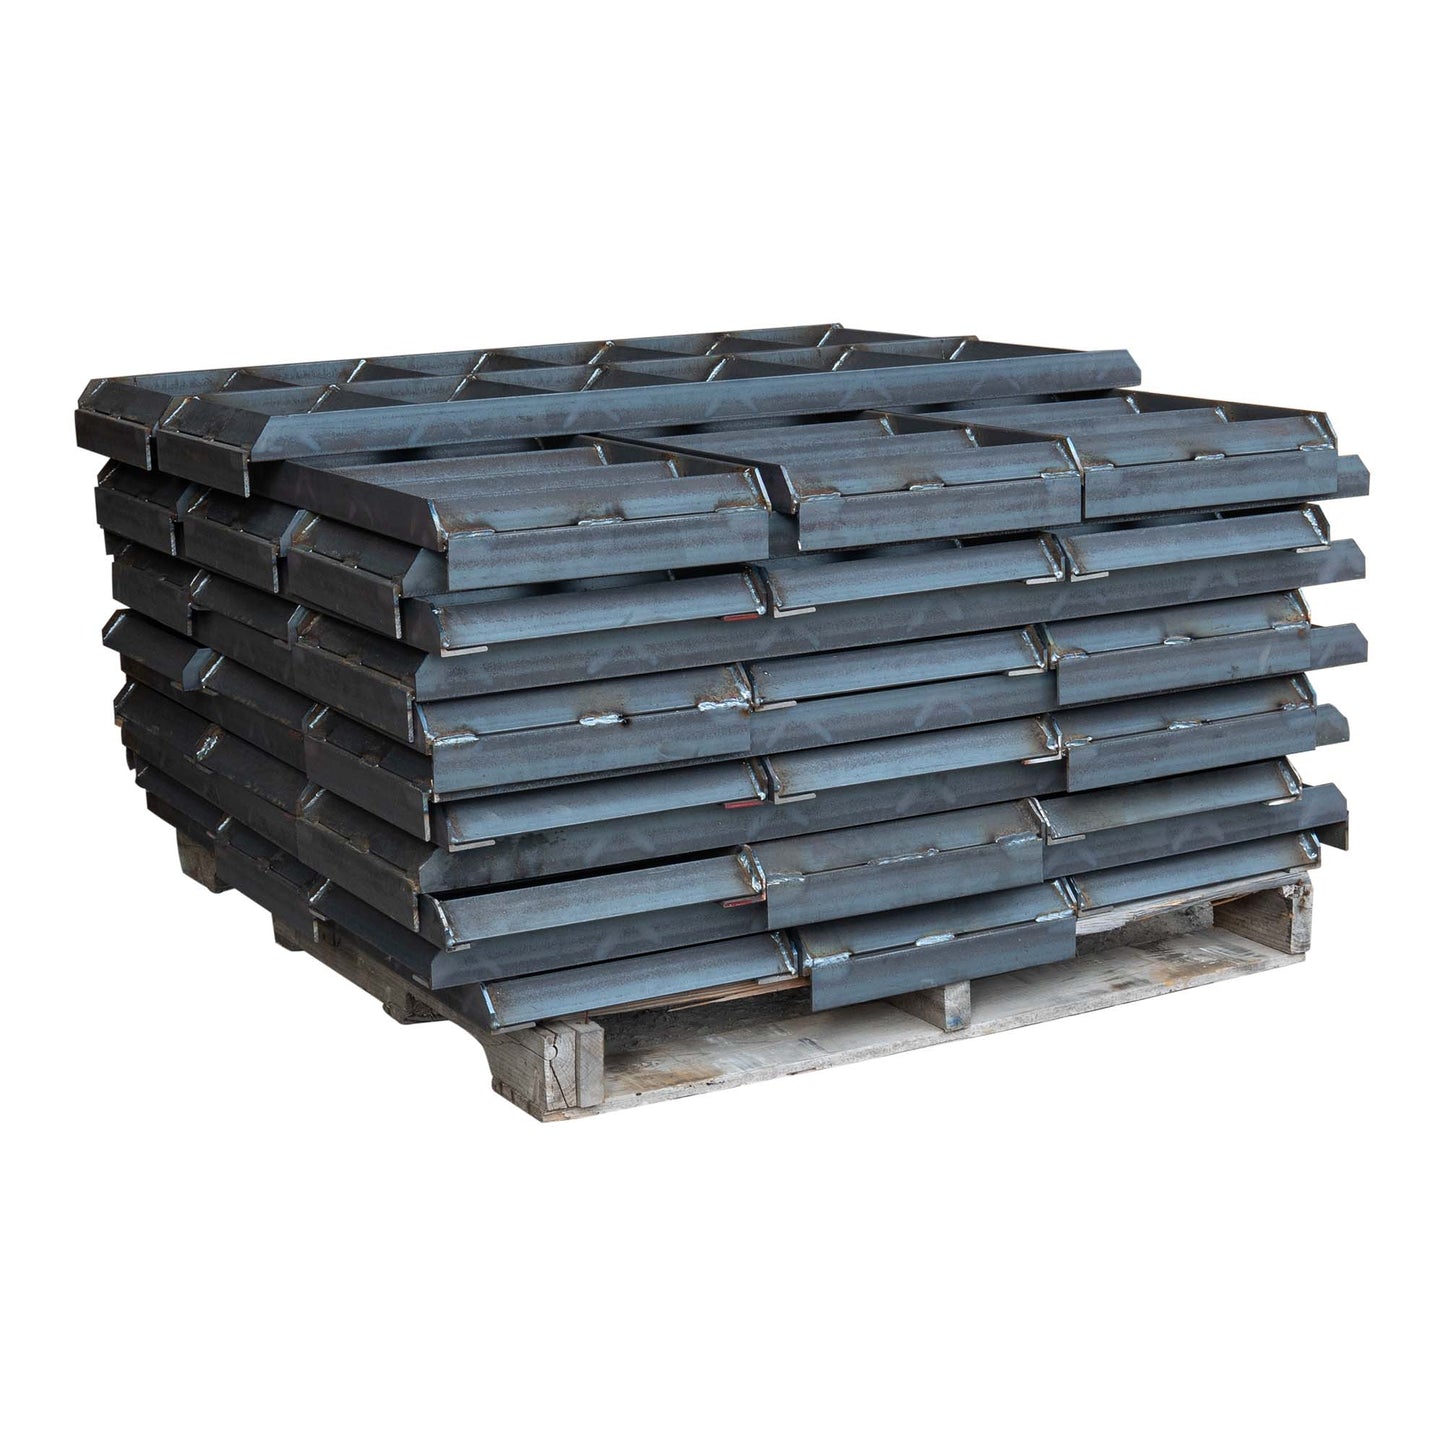 2" Angle Iron Steel Loading Ramps (5,000 lb Capacity)